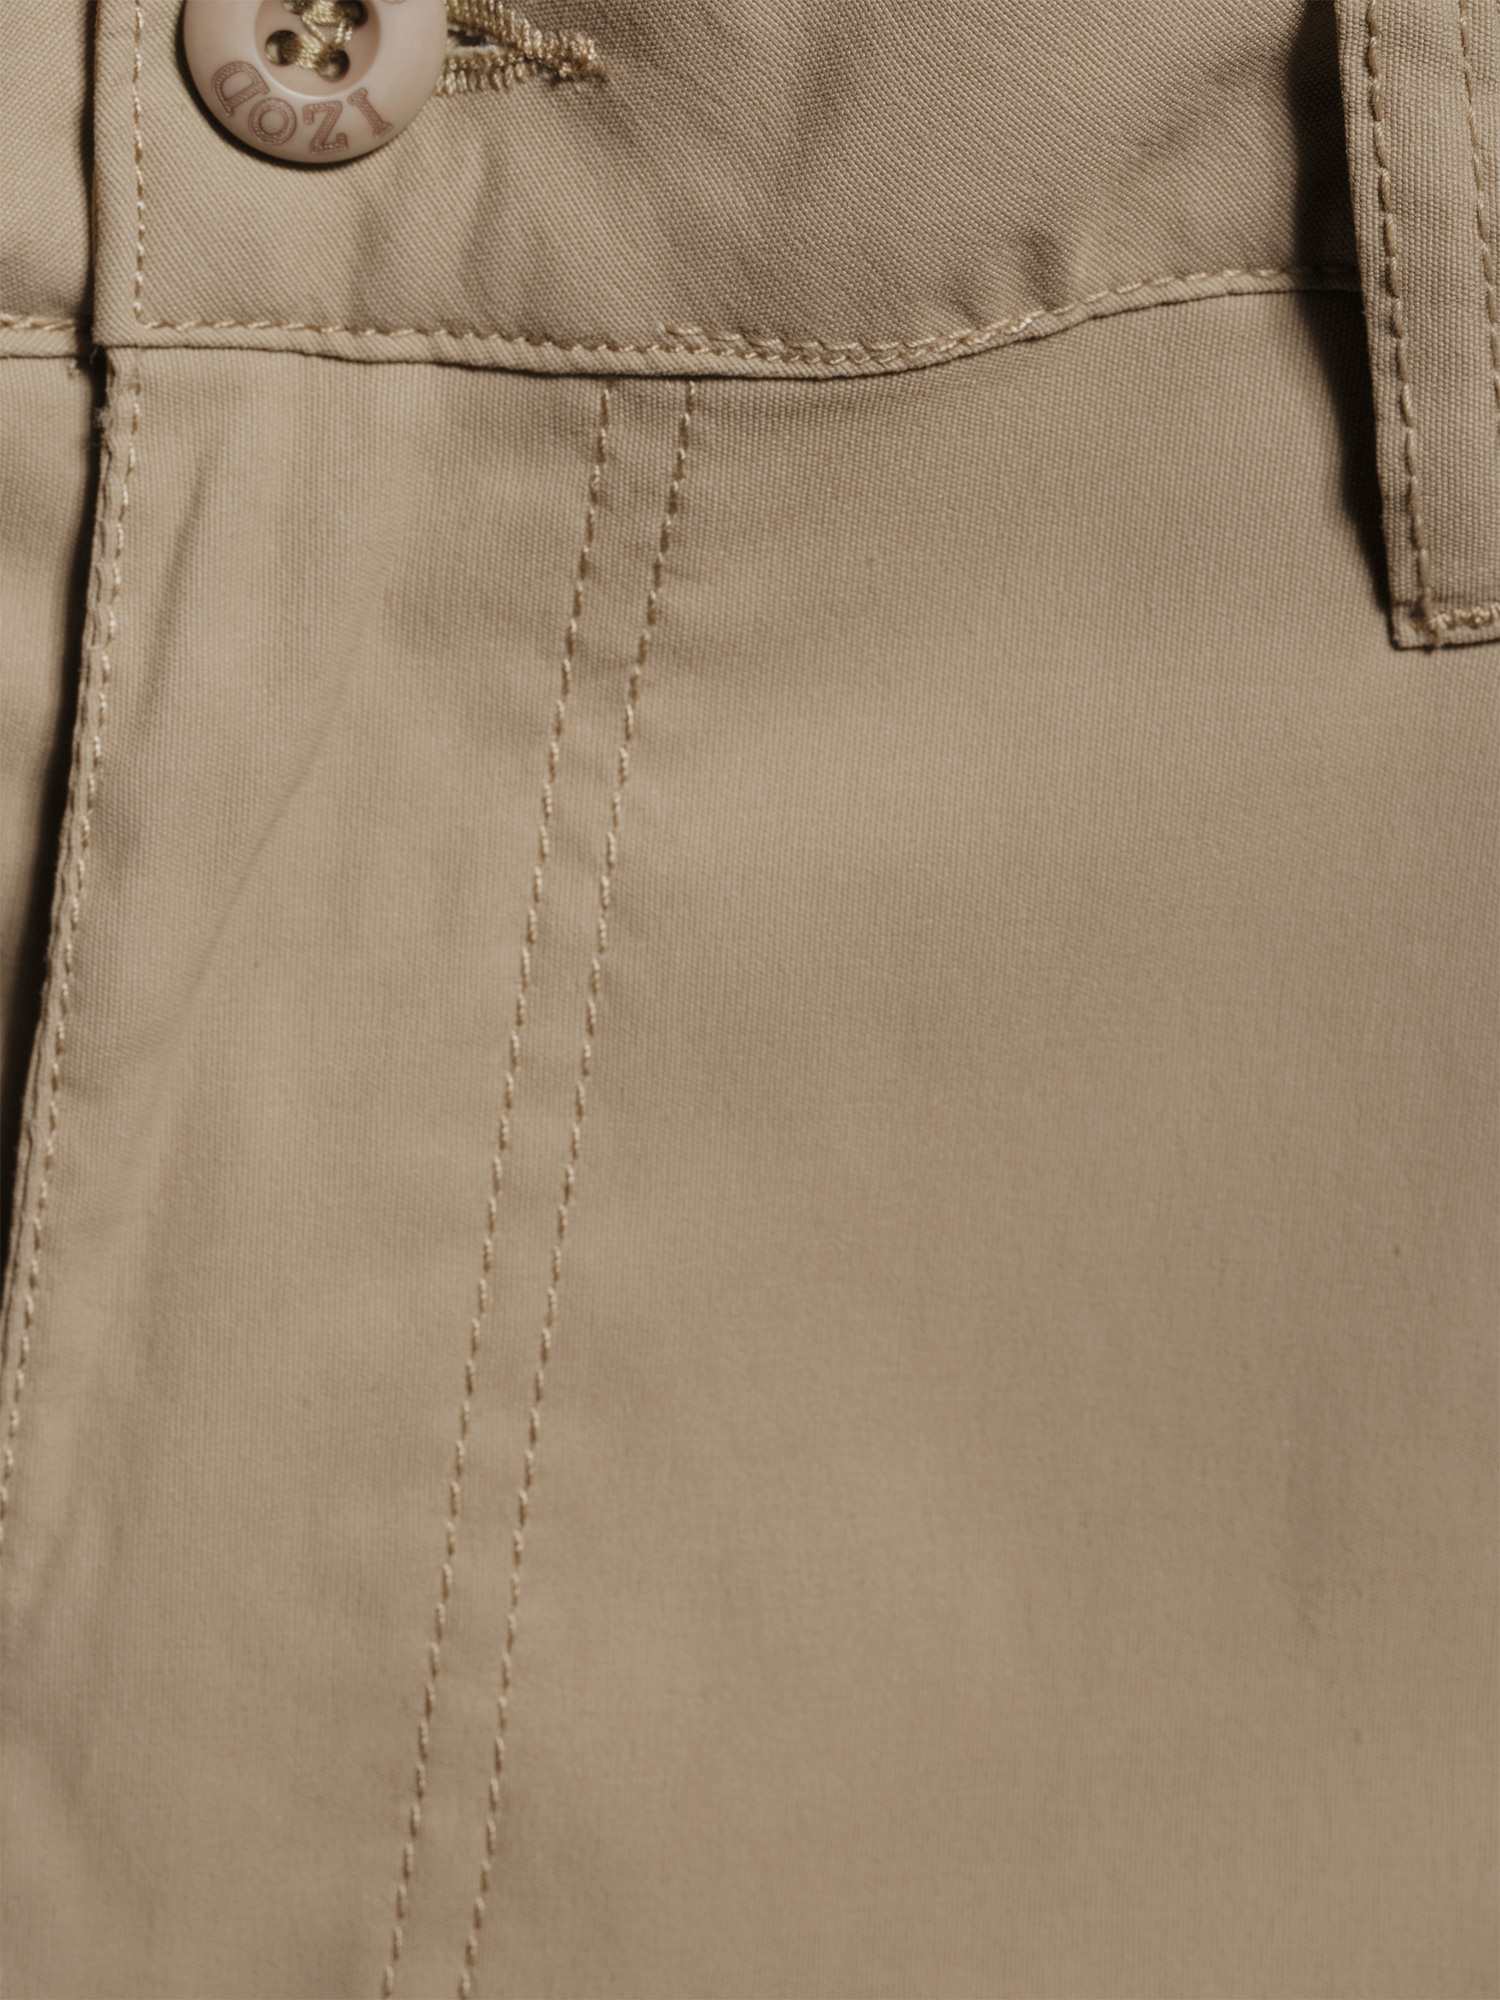 IZOD Men's Slim Straight 5 Pocket Pants - image 5 of 6